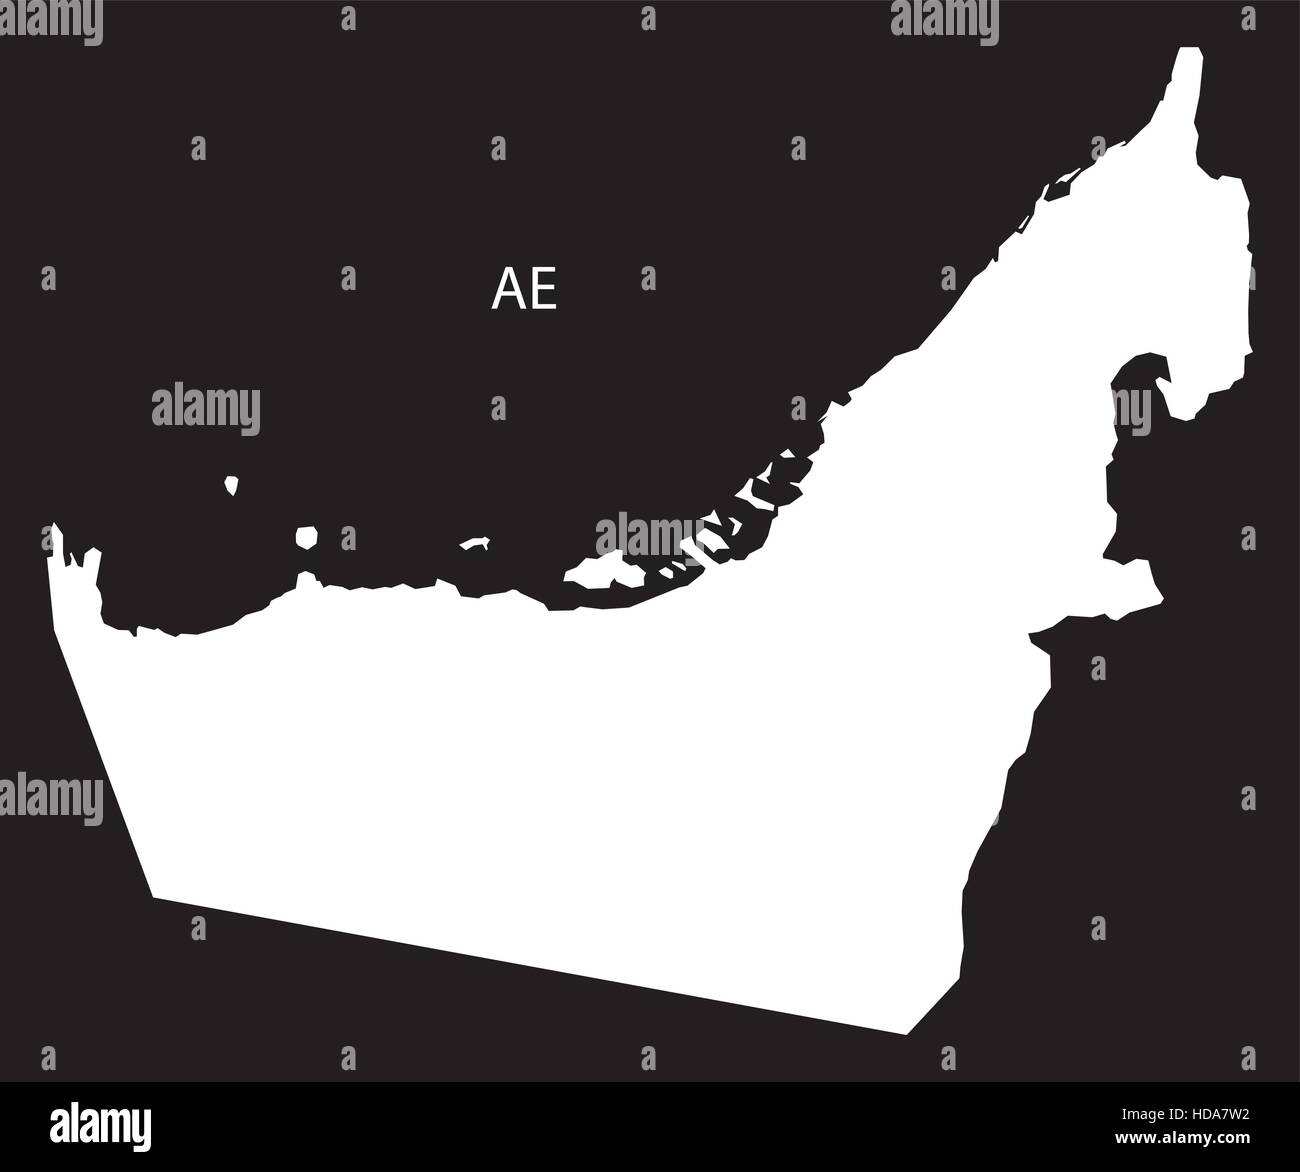 United Arab Emirates Map black and white illustration Stock Vector